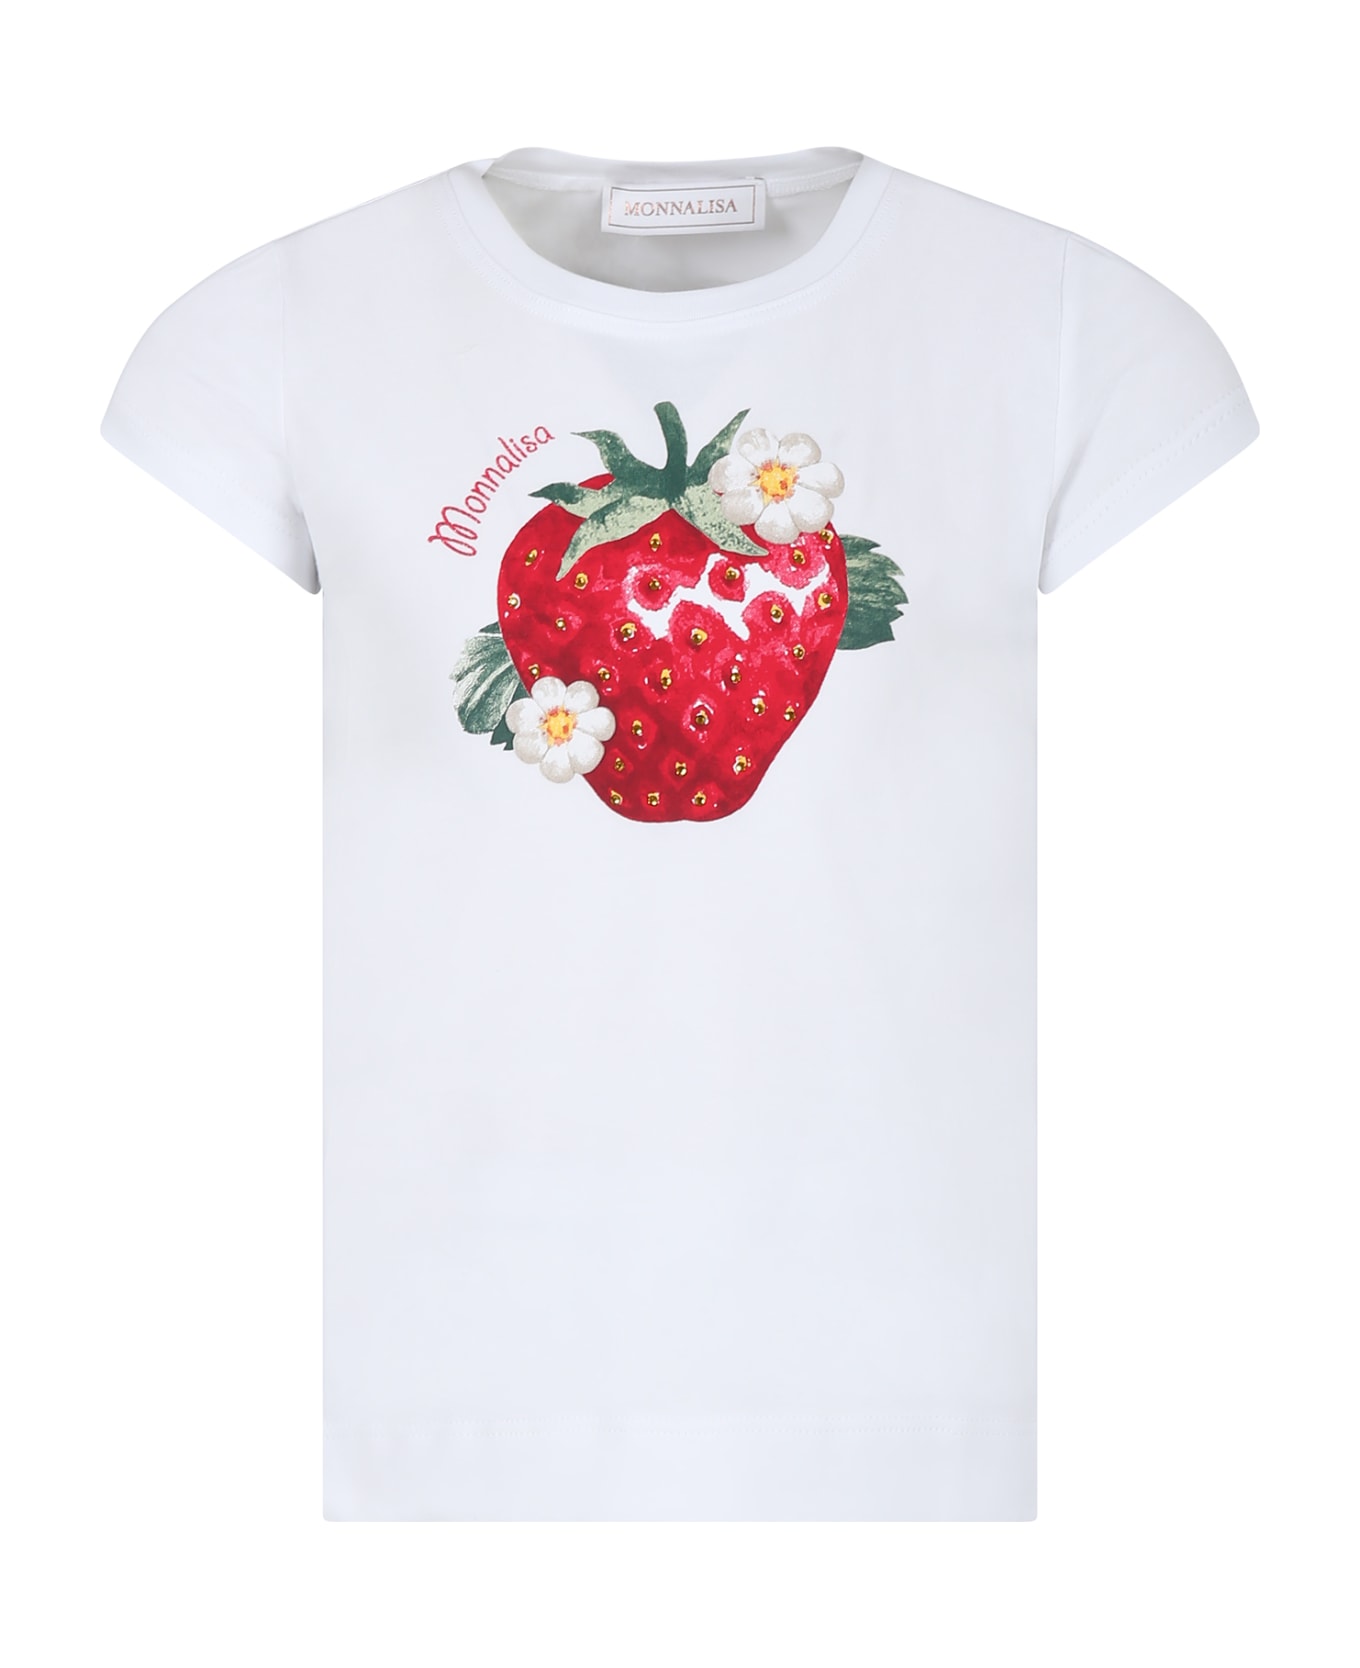 Monnalisa White T-shirt For Girl With Strawberry Print - White